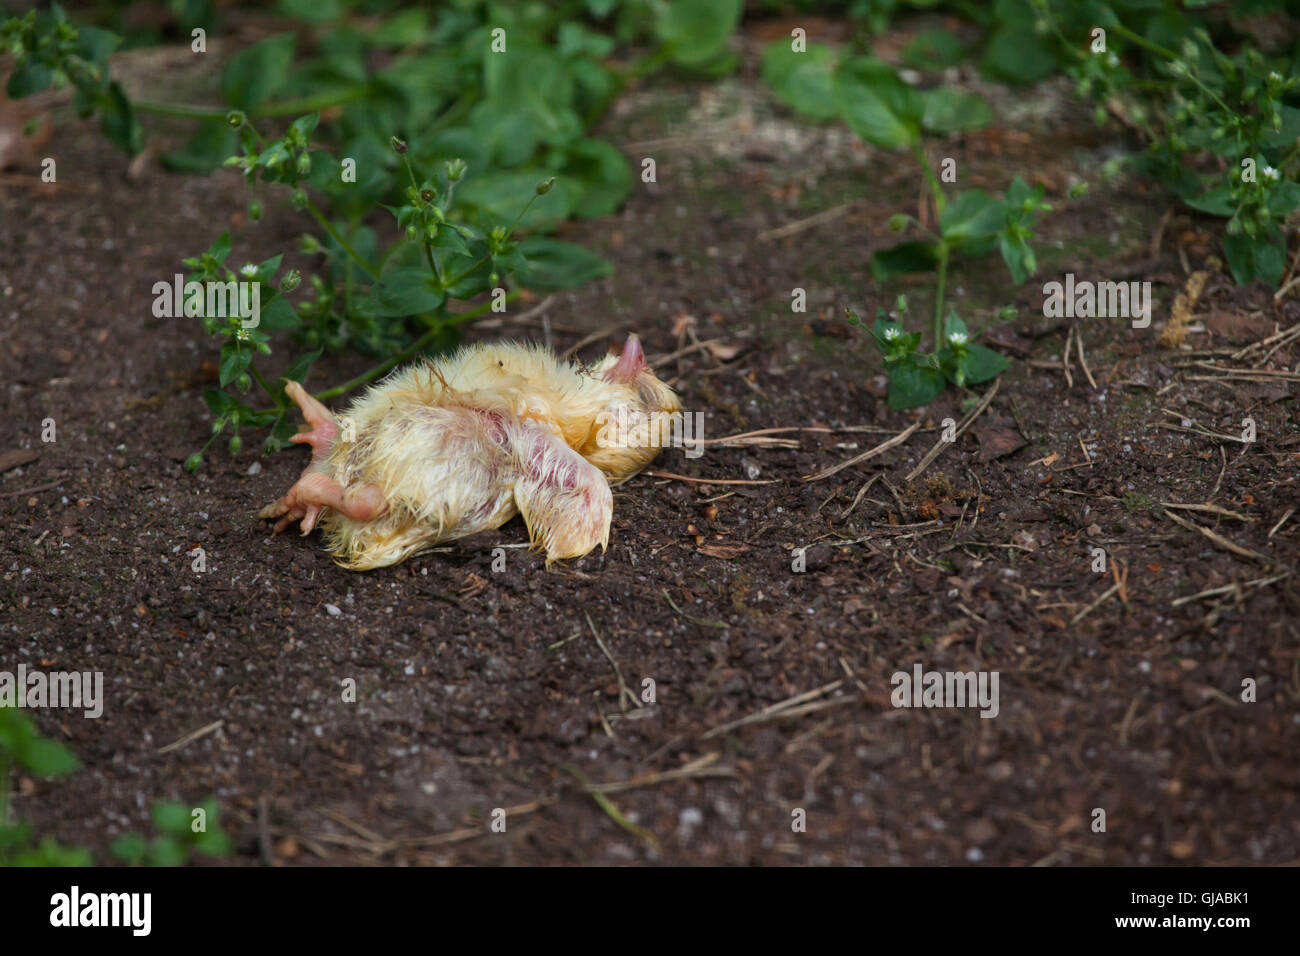 Dead chicken prepared as ration for carnivores at Decin Zoo in North Bohemia, Czech Republic. Stock Photo